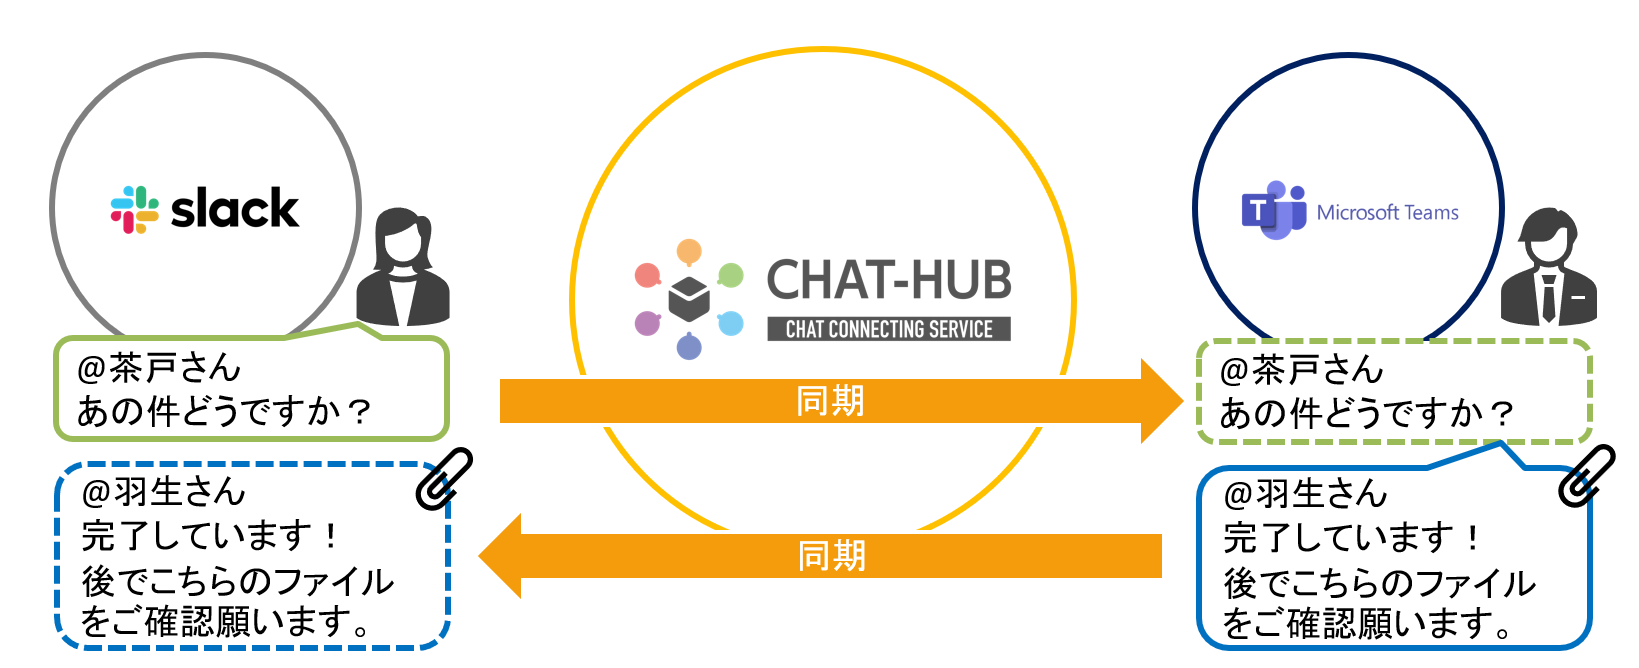 CHAT-HUB 連携イメージ